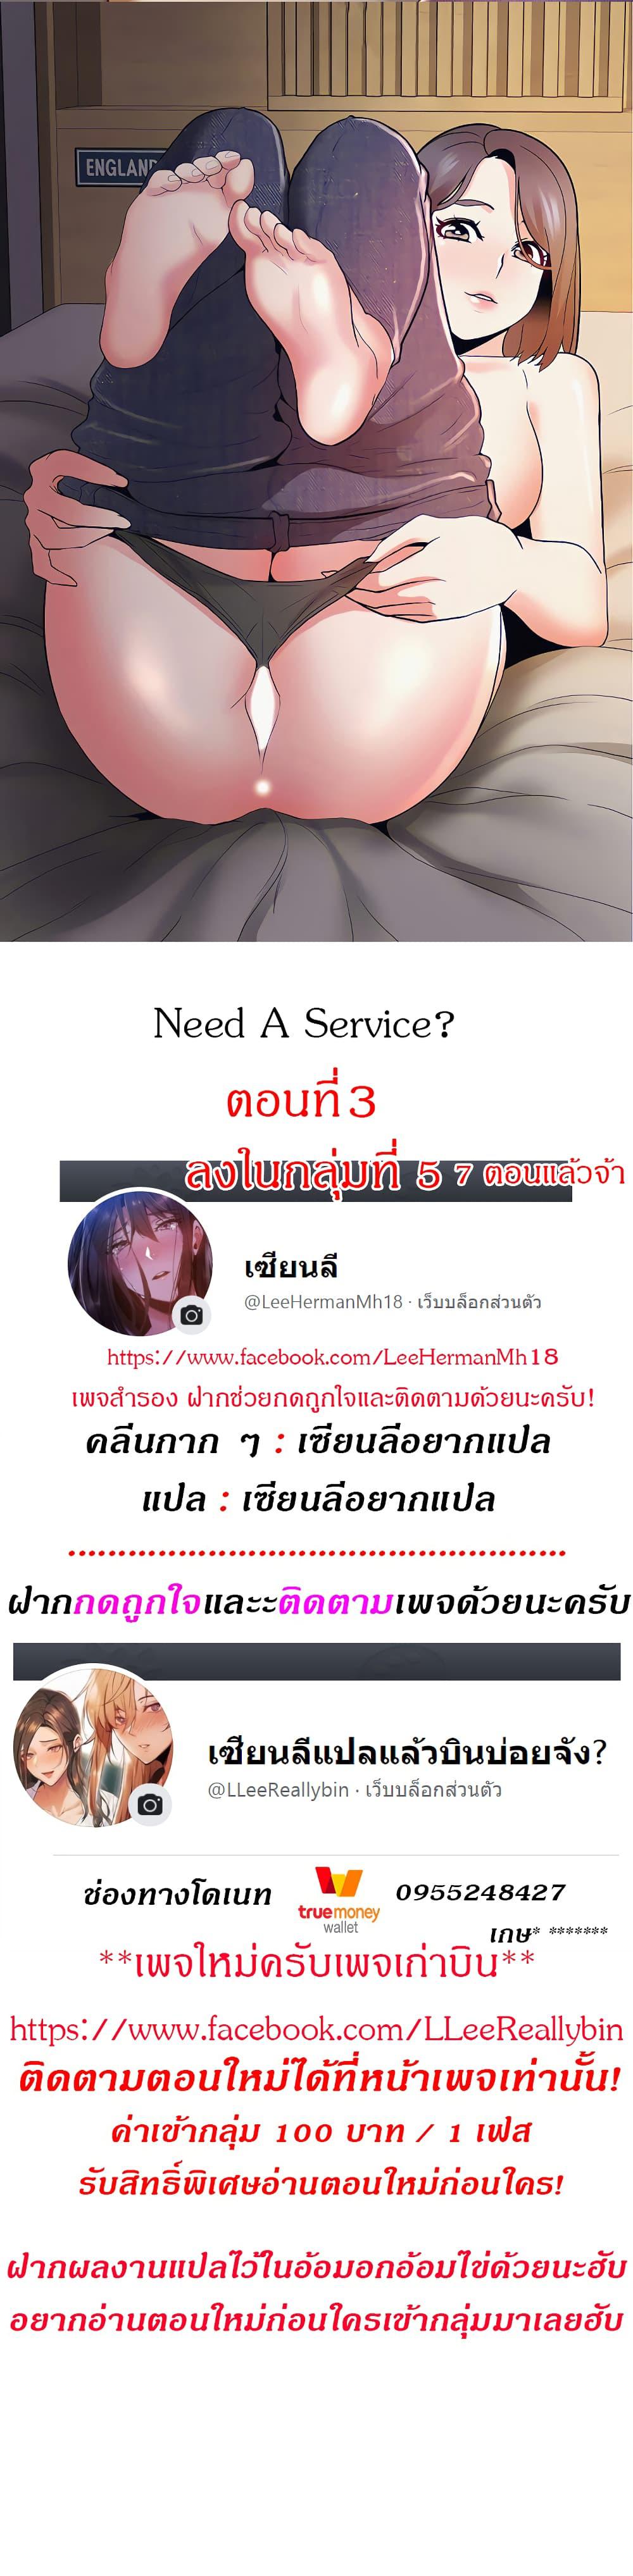 Need A Service? 3 ภาพ 0